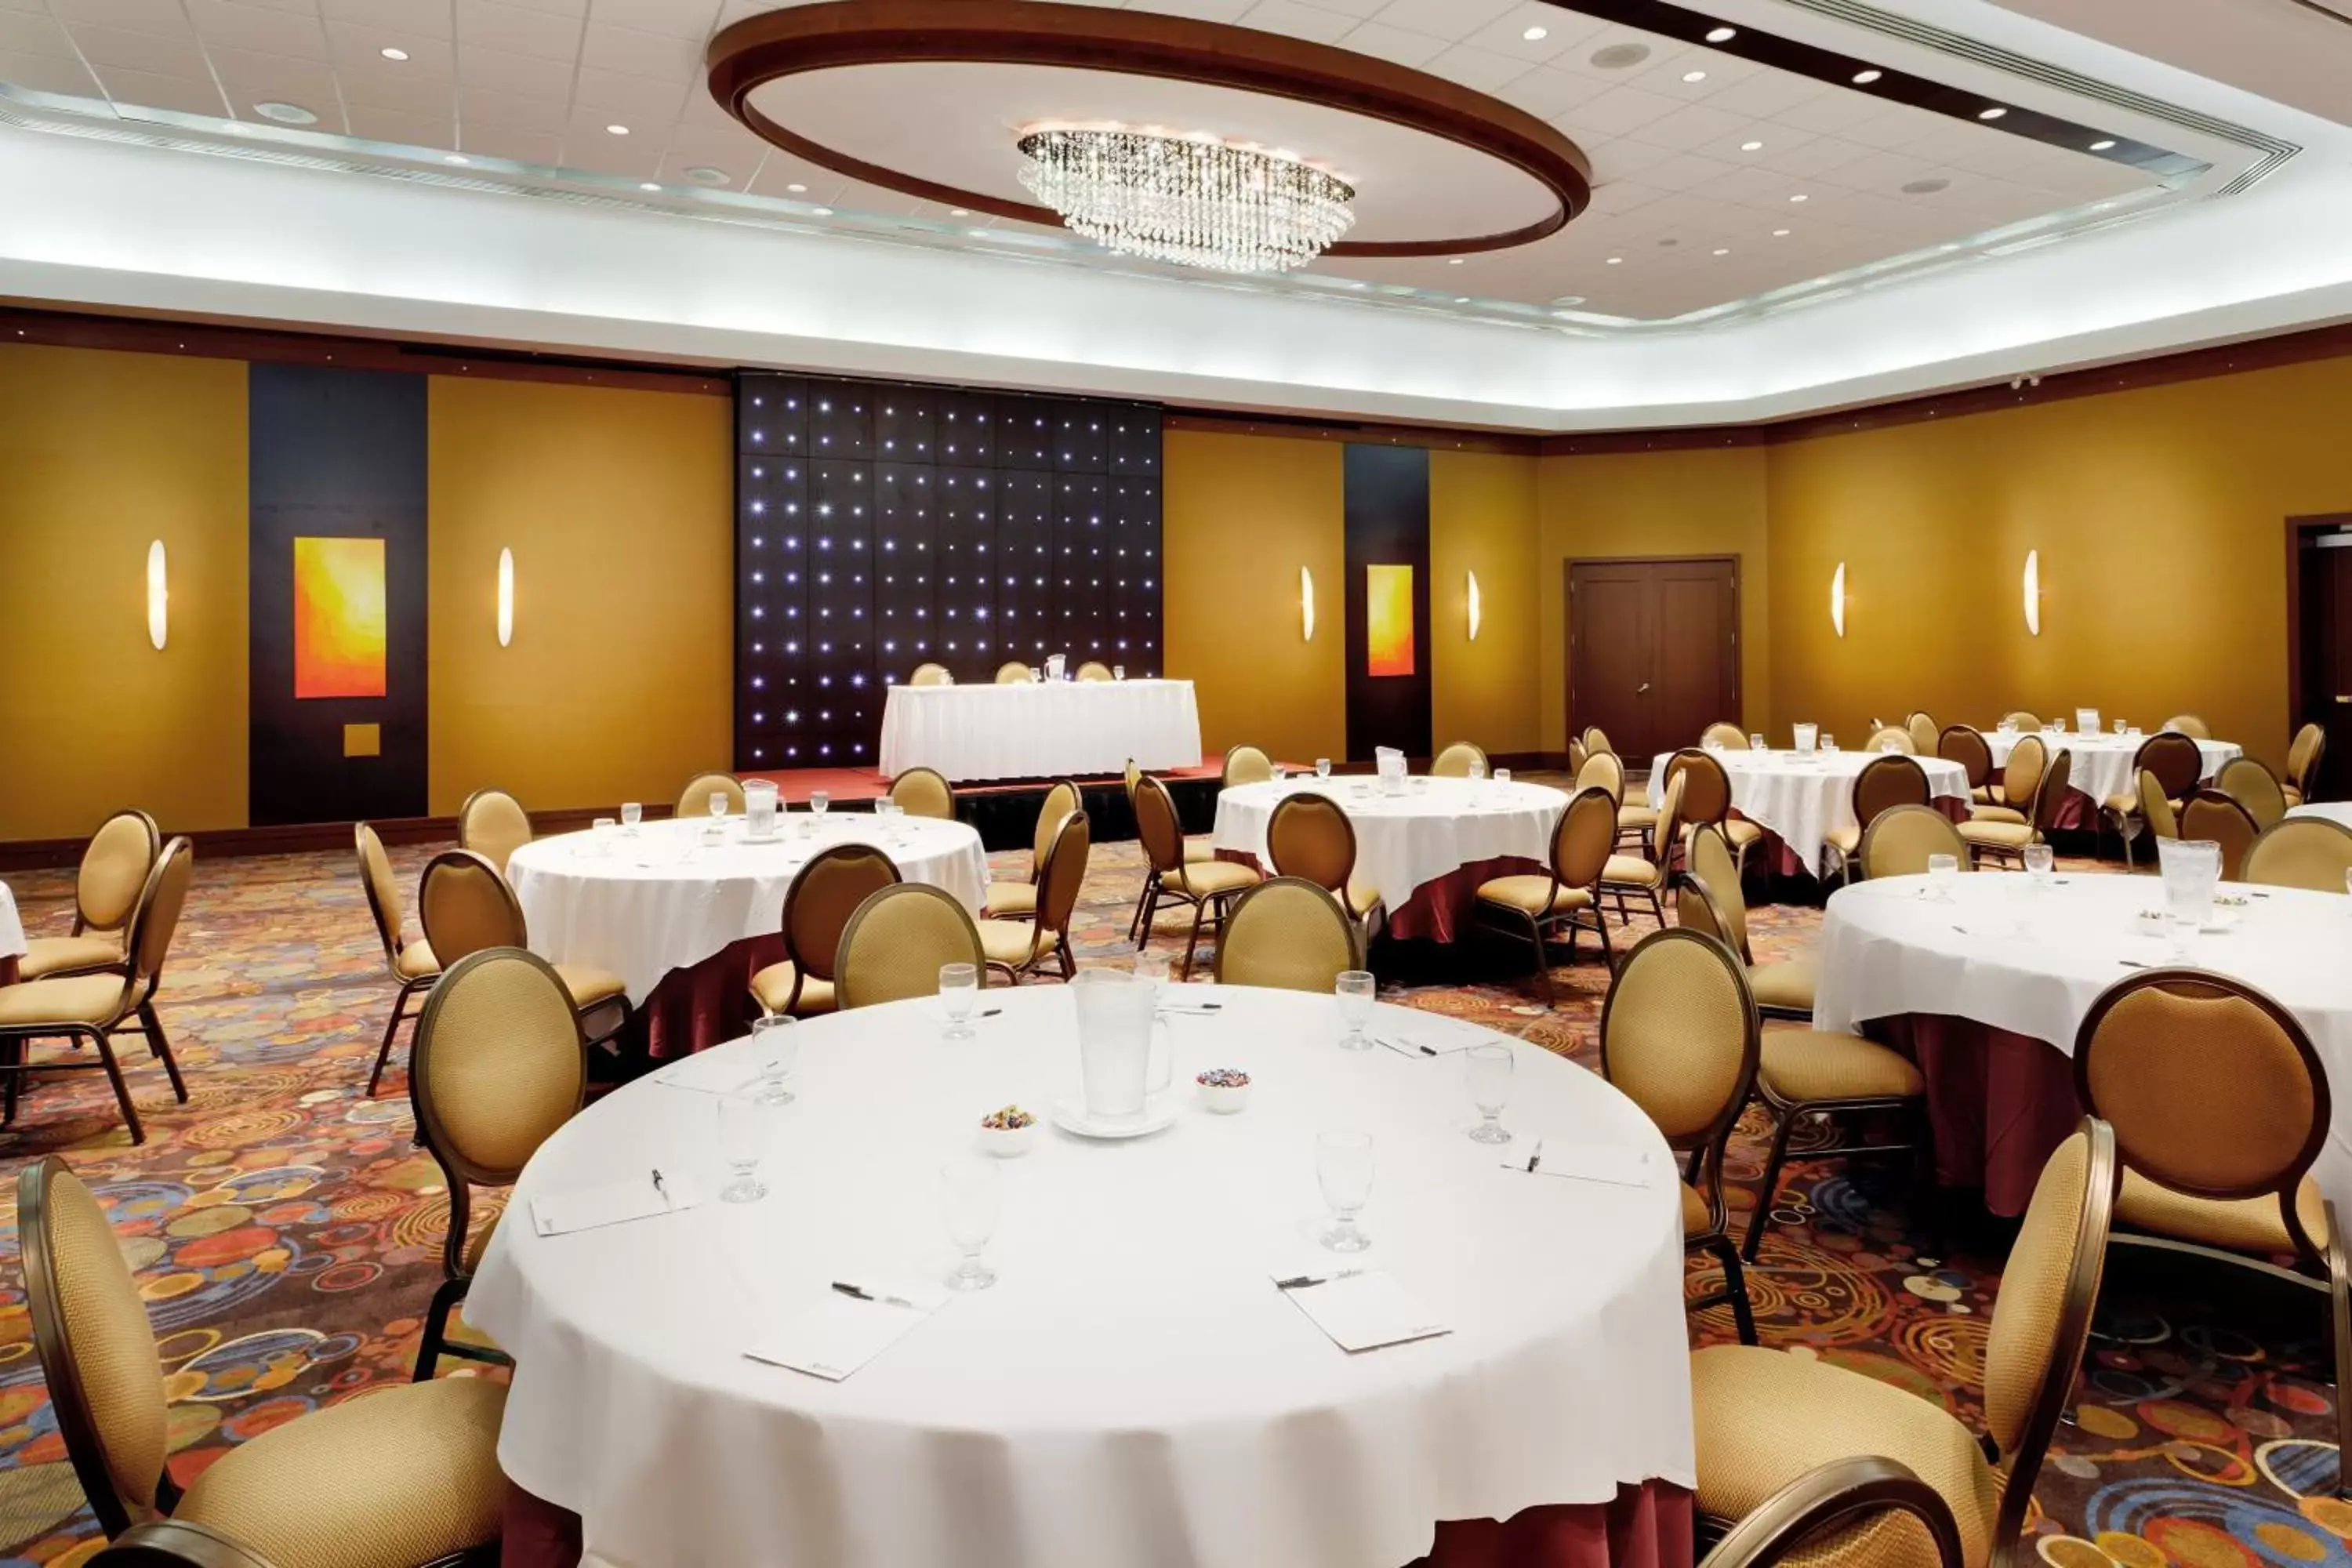 Banquet/Function facilities, Banquet Facilities in Radisson Hotel Vancouver Airport